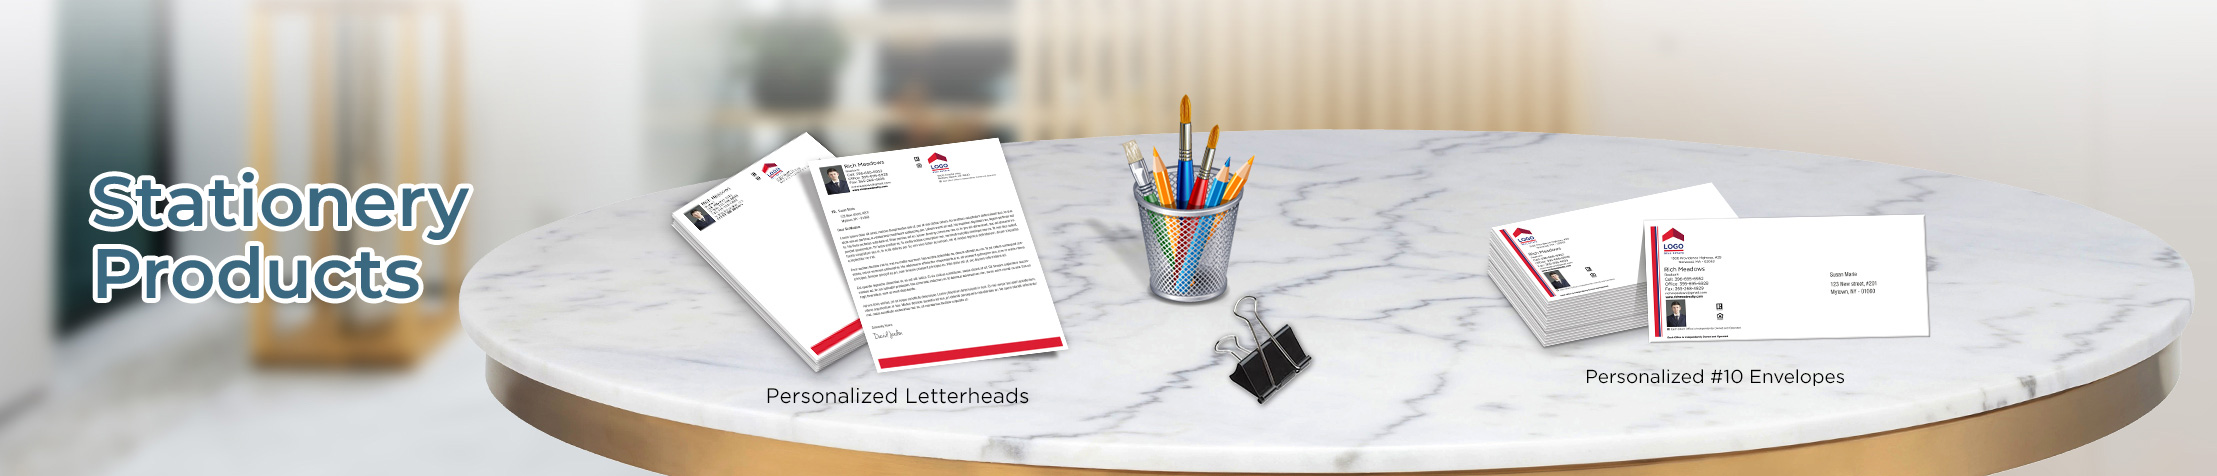 ERA Real Estate Stationery Products - Custom Letterhead & Envelopes Stationery Products for Realtors | BestPrintBuy.com